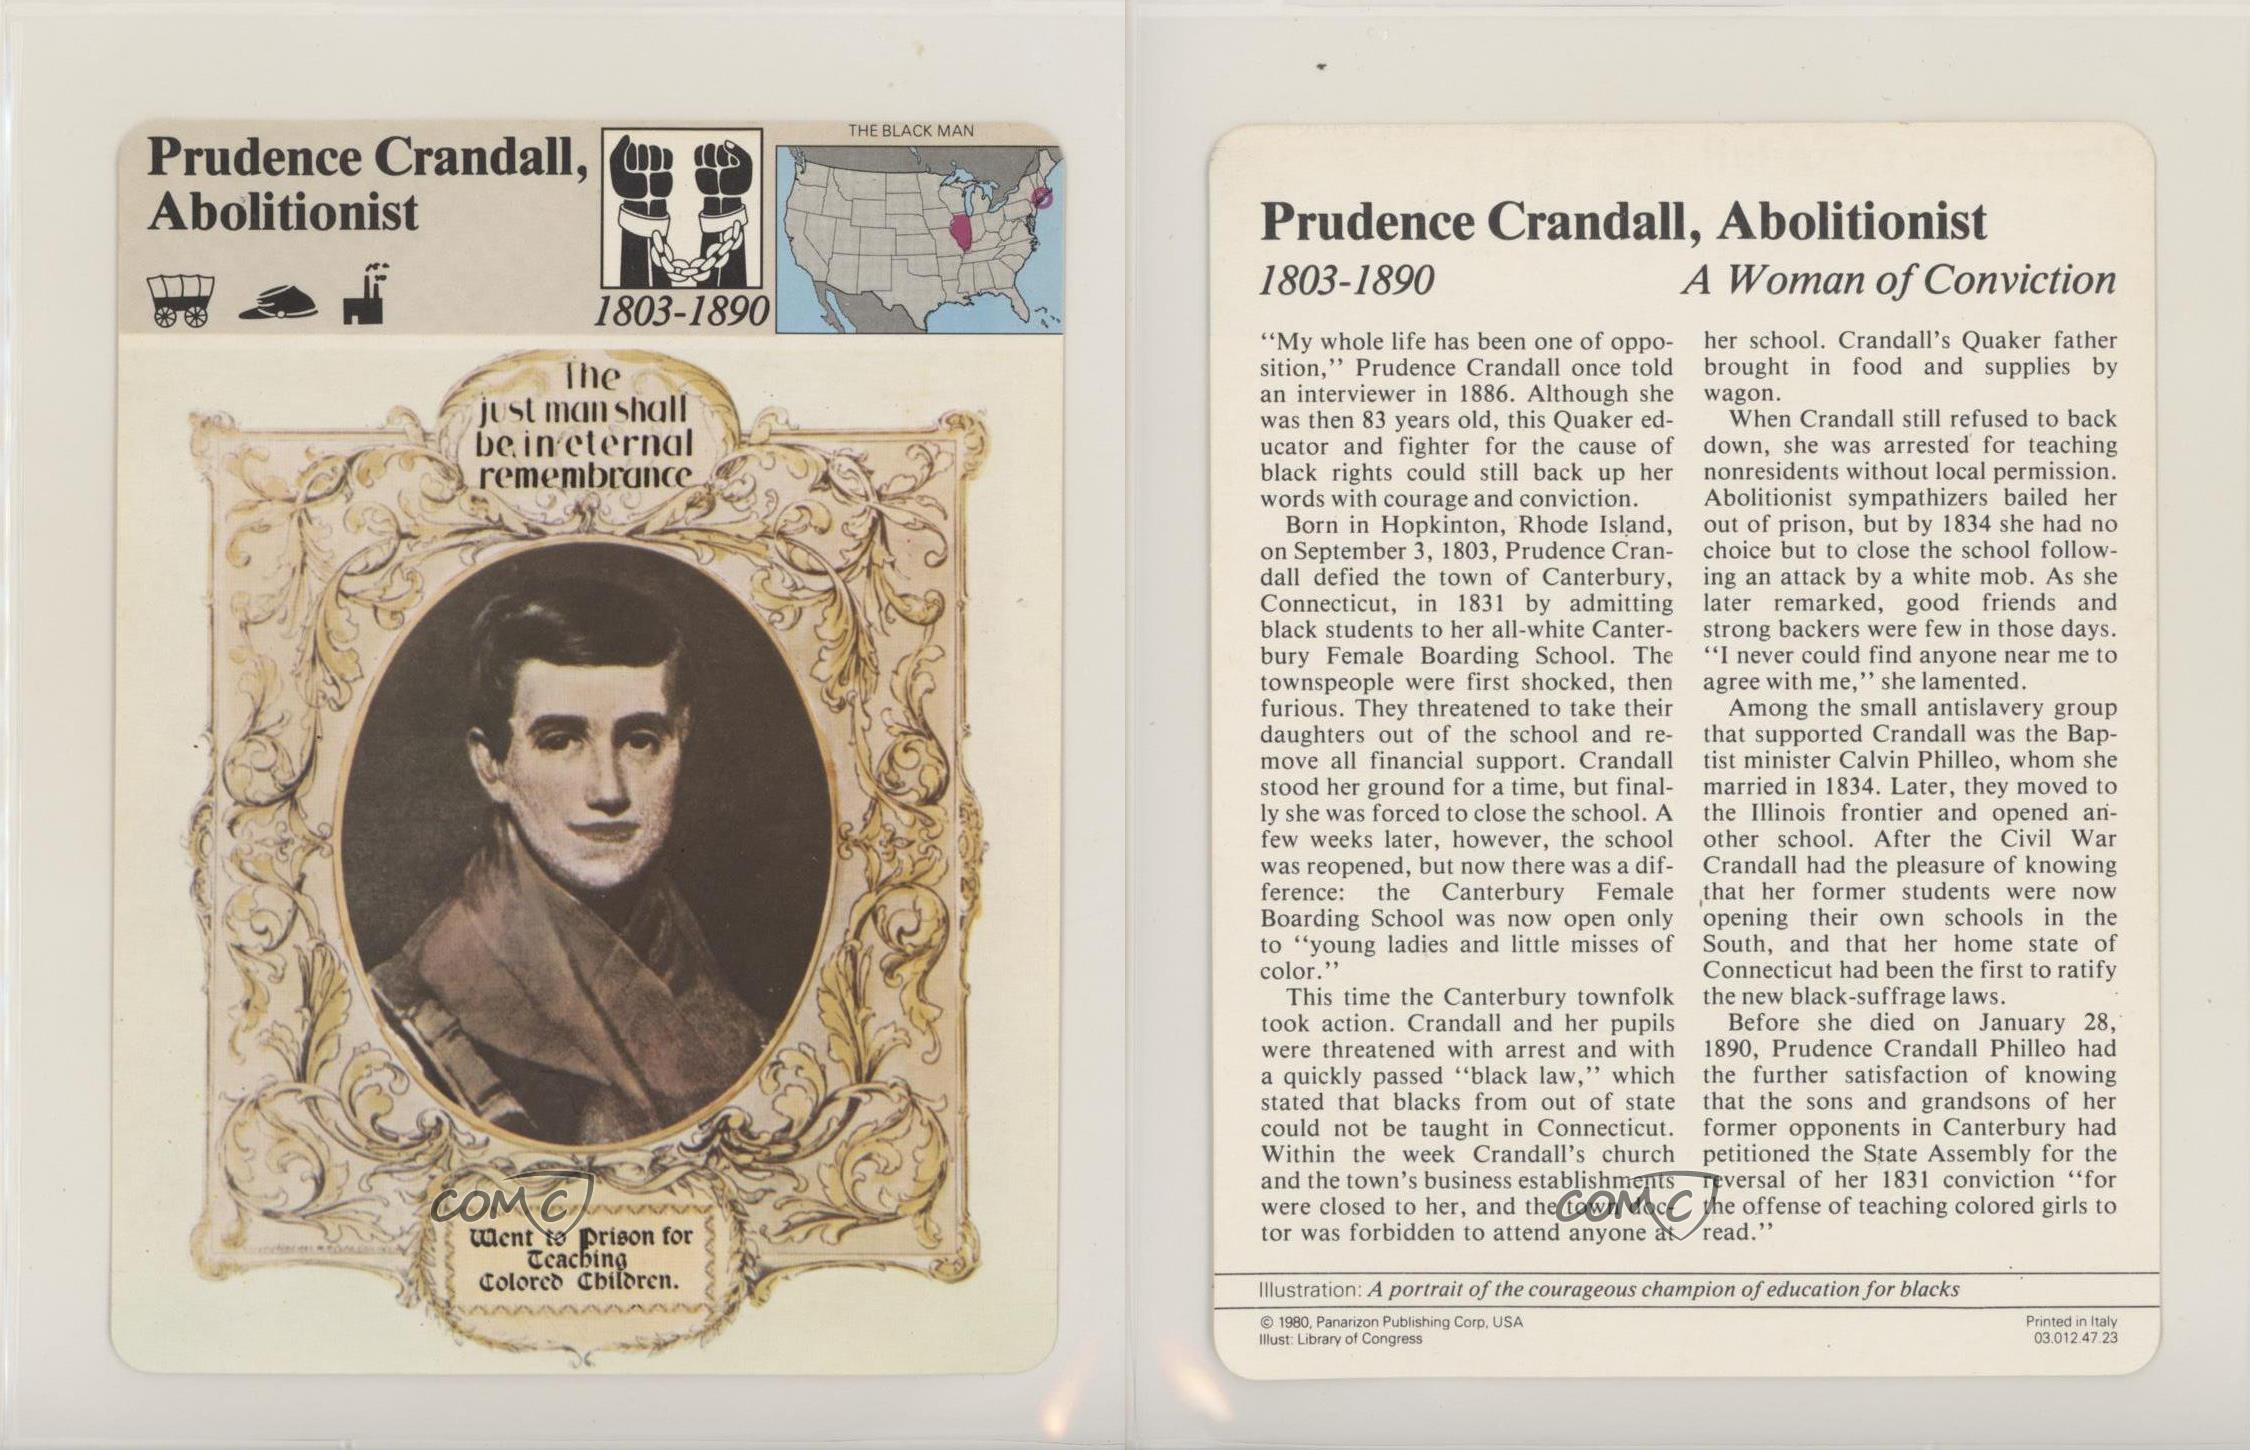 PRUDENCE CRANDALL Abolitionist Educator PANARIZON STORY OF AMERICA CARD 